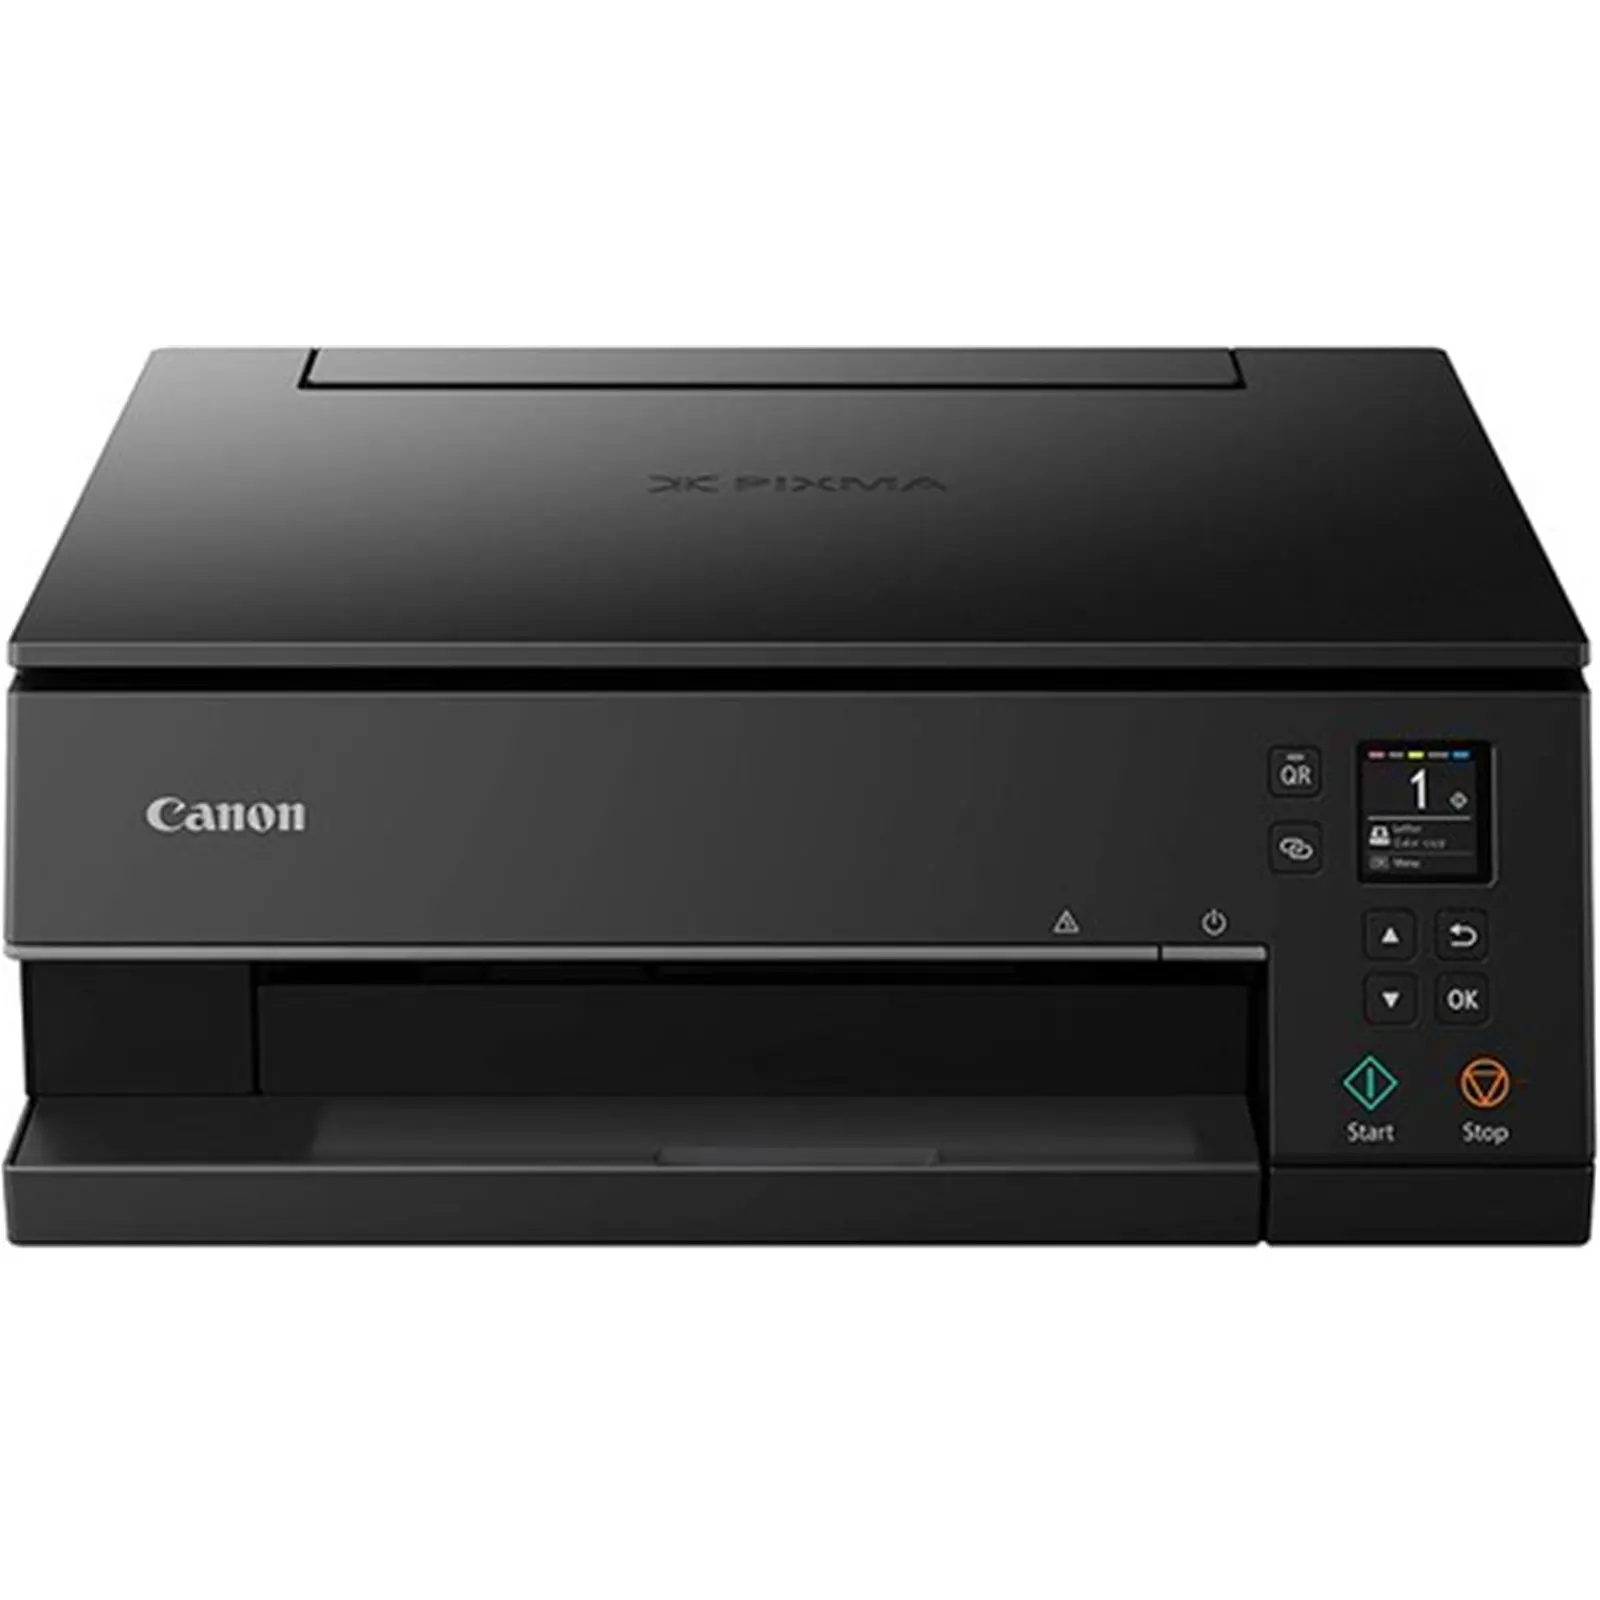 Canon PIXMA TS6350a Wireless Printer, Colour, All in One, Inkjet, A4, A5, B5 & Letter, Photo, 4800x1200 dpi, Black, Screen